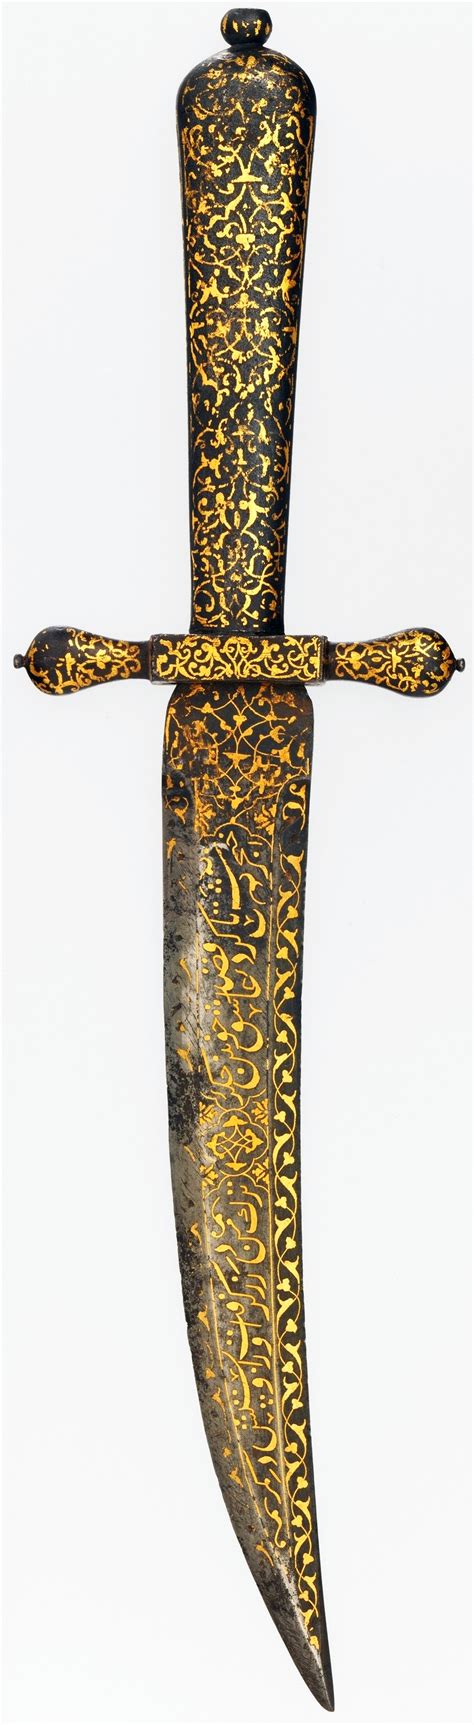 jambiya dagger ottoman blade mid 16th c european hilt 1600 1650 steel damascened with